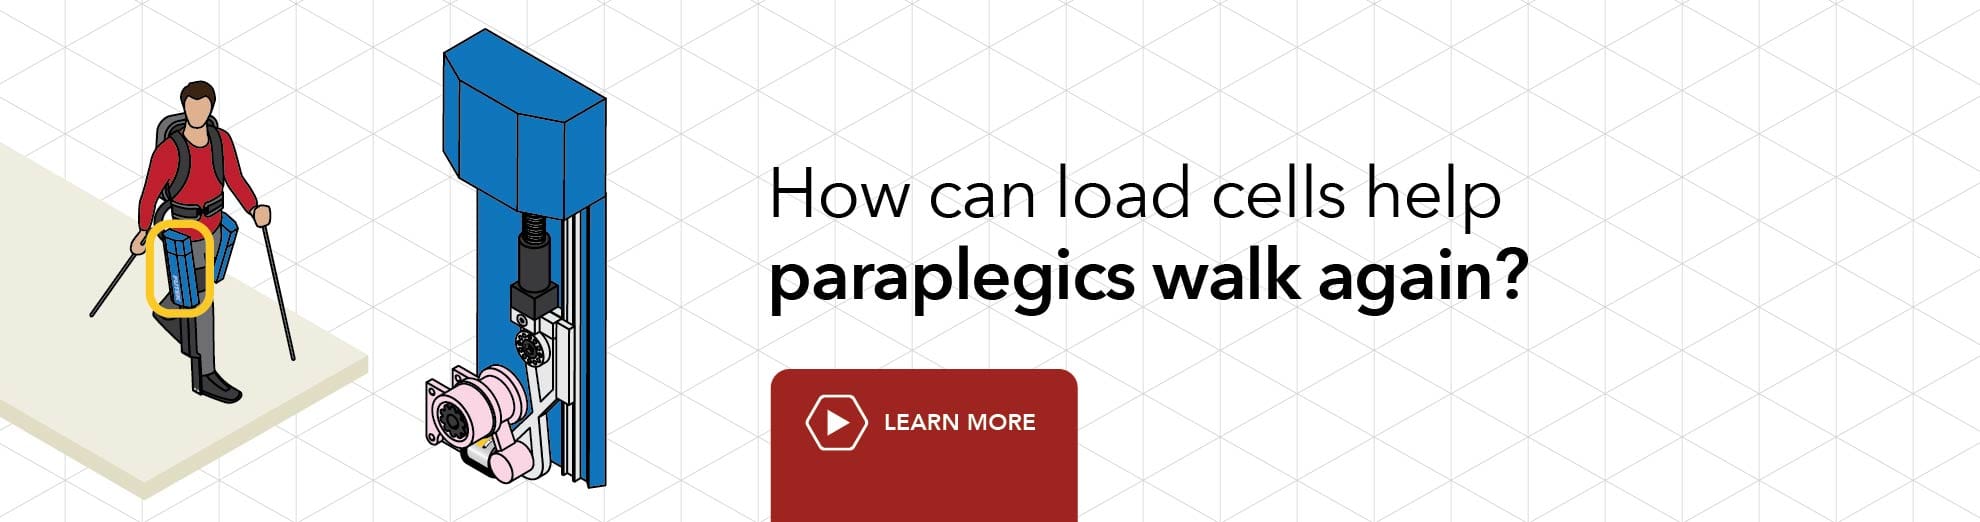 How can load cells help paraplegics walk again? Learn more